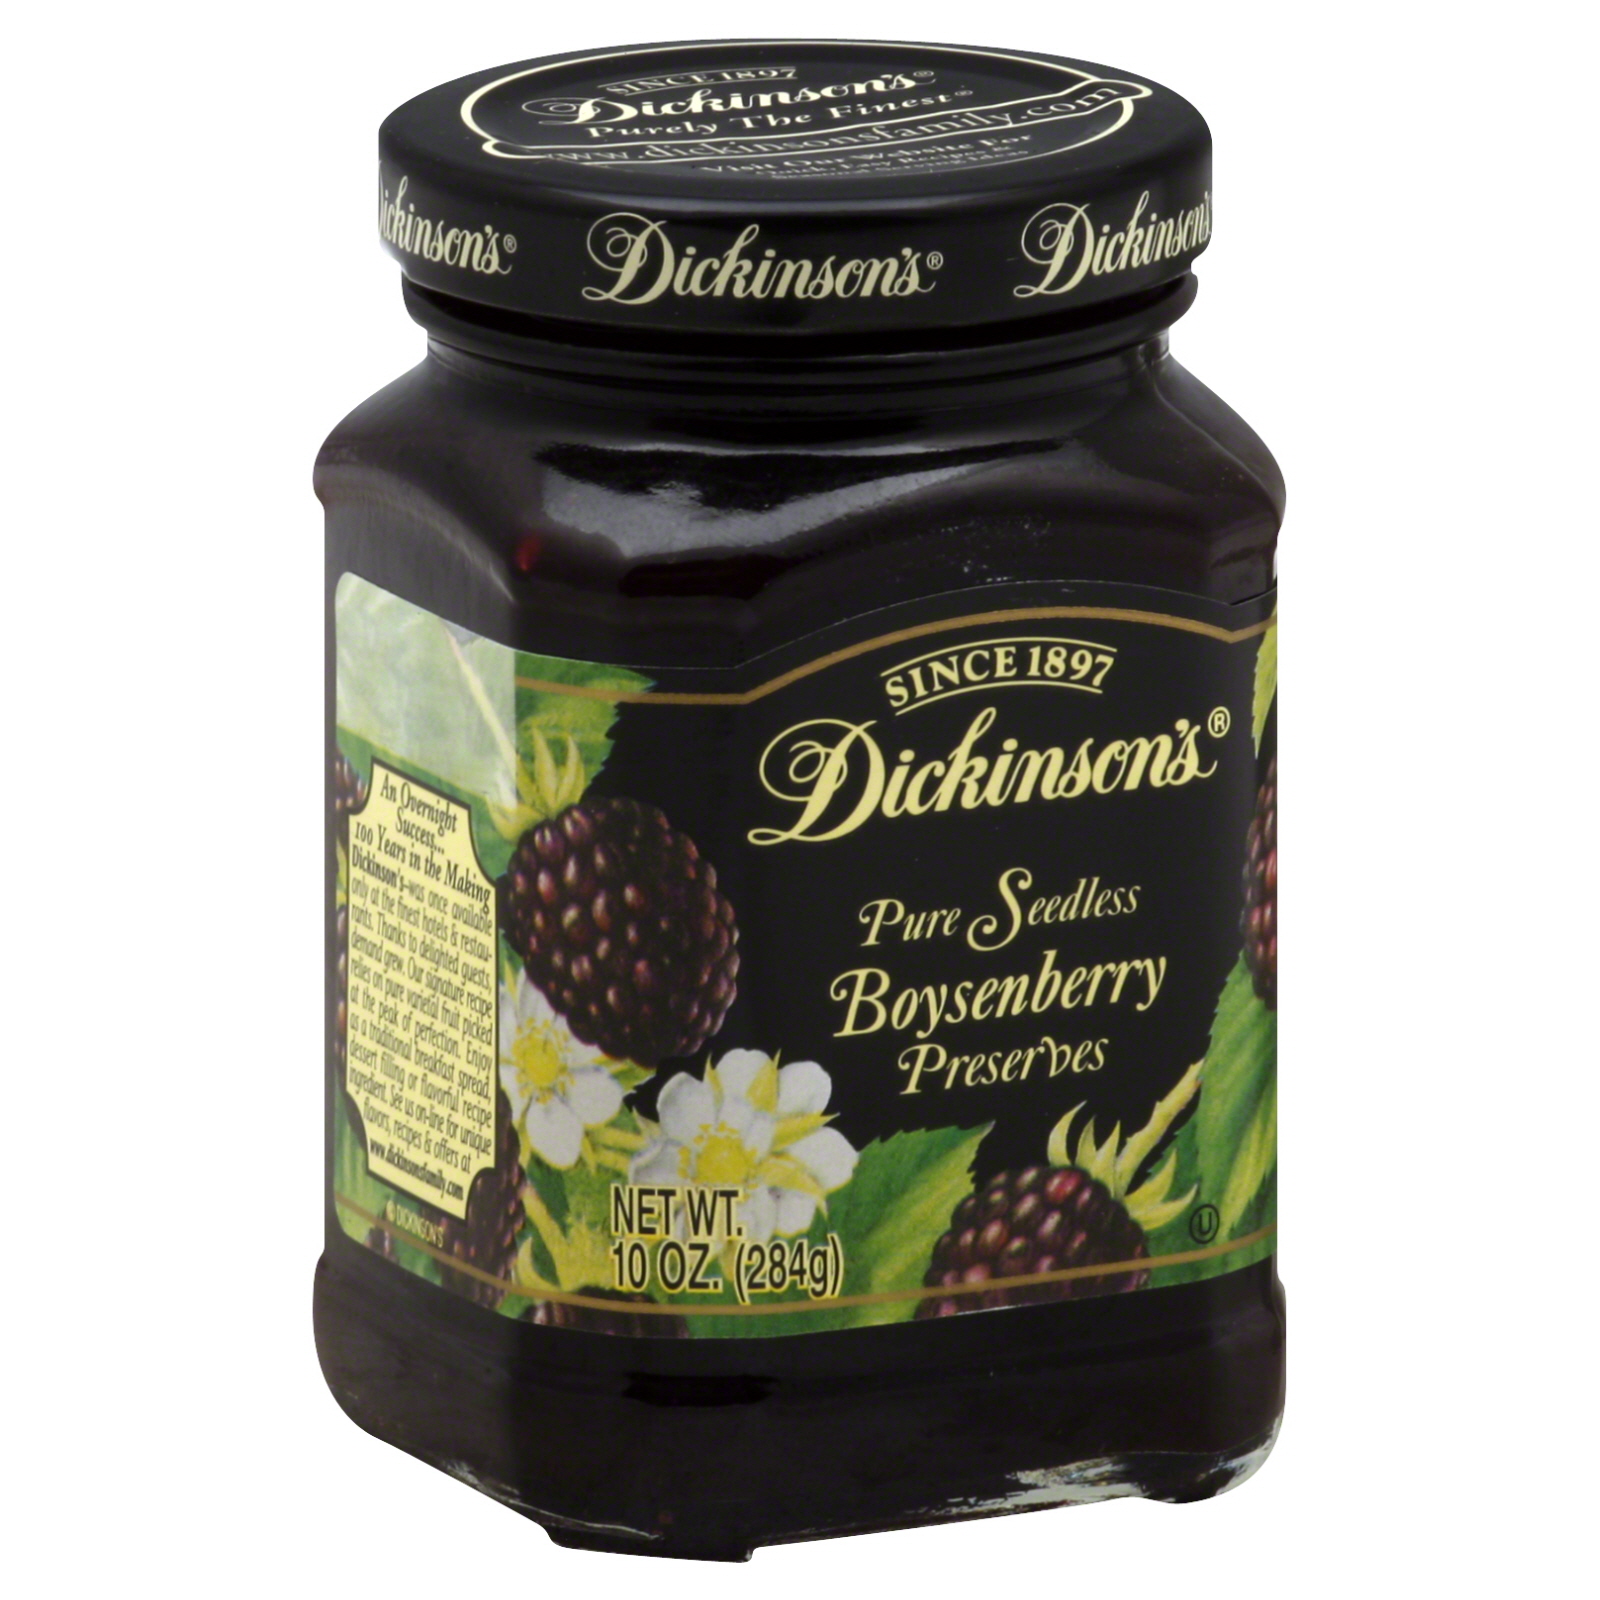 Dickinson's Boysenberry Preserves, 10 oz (284 g)